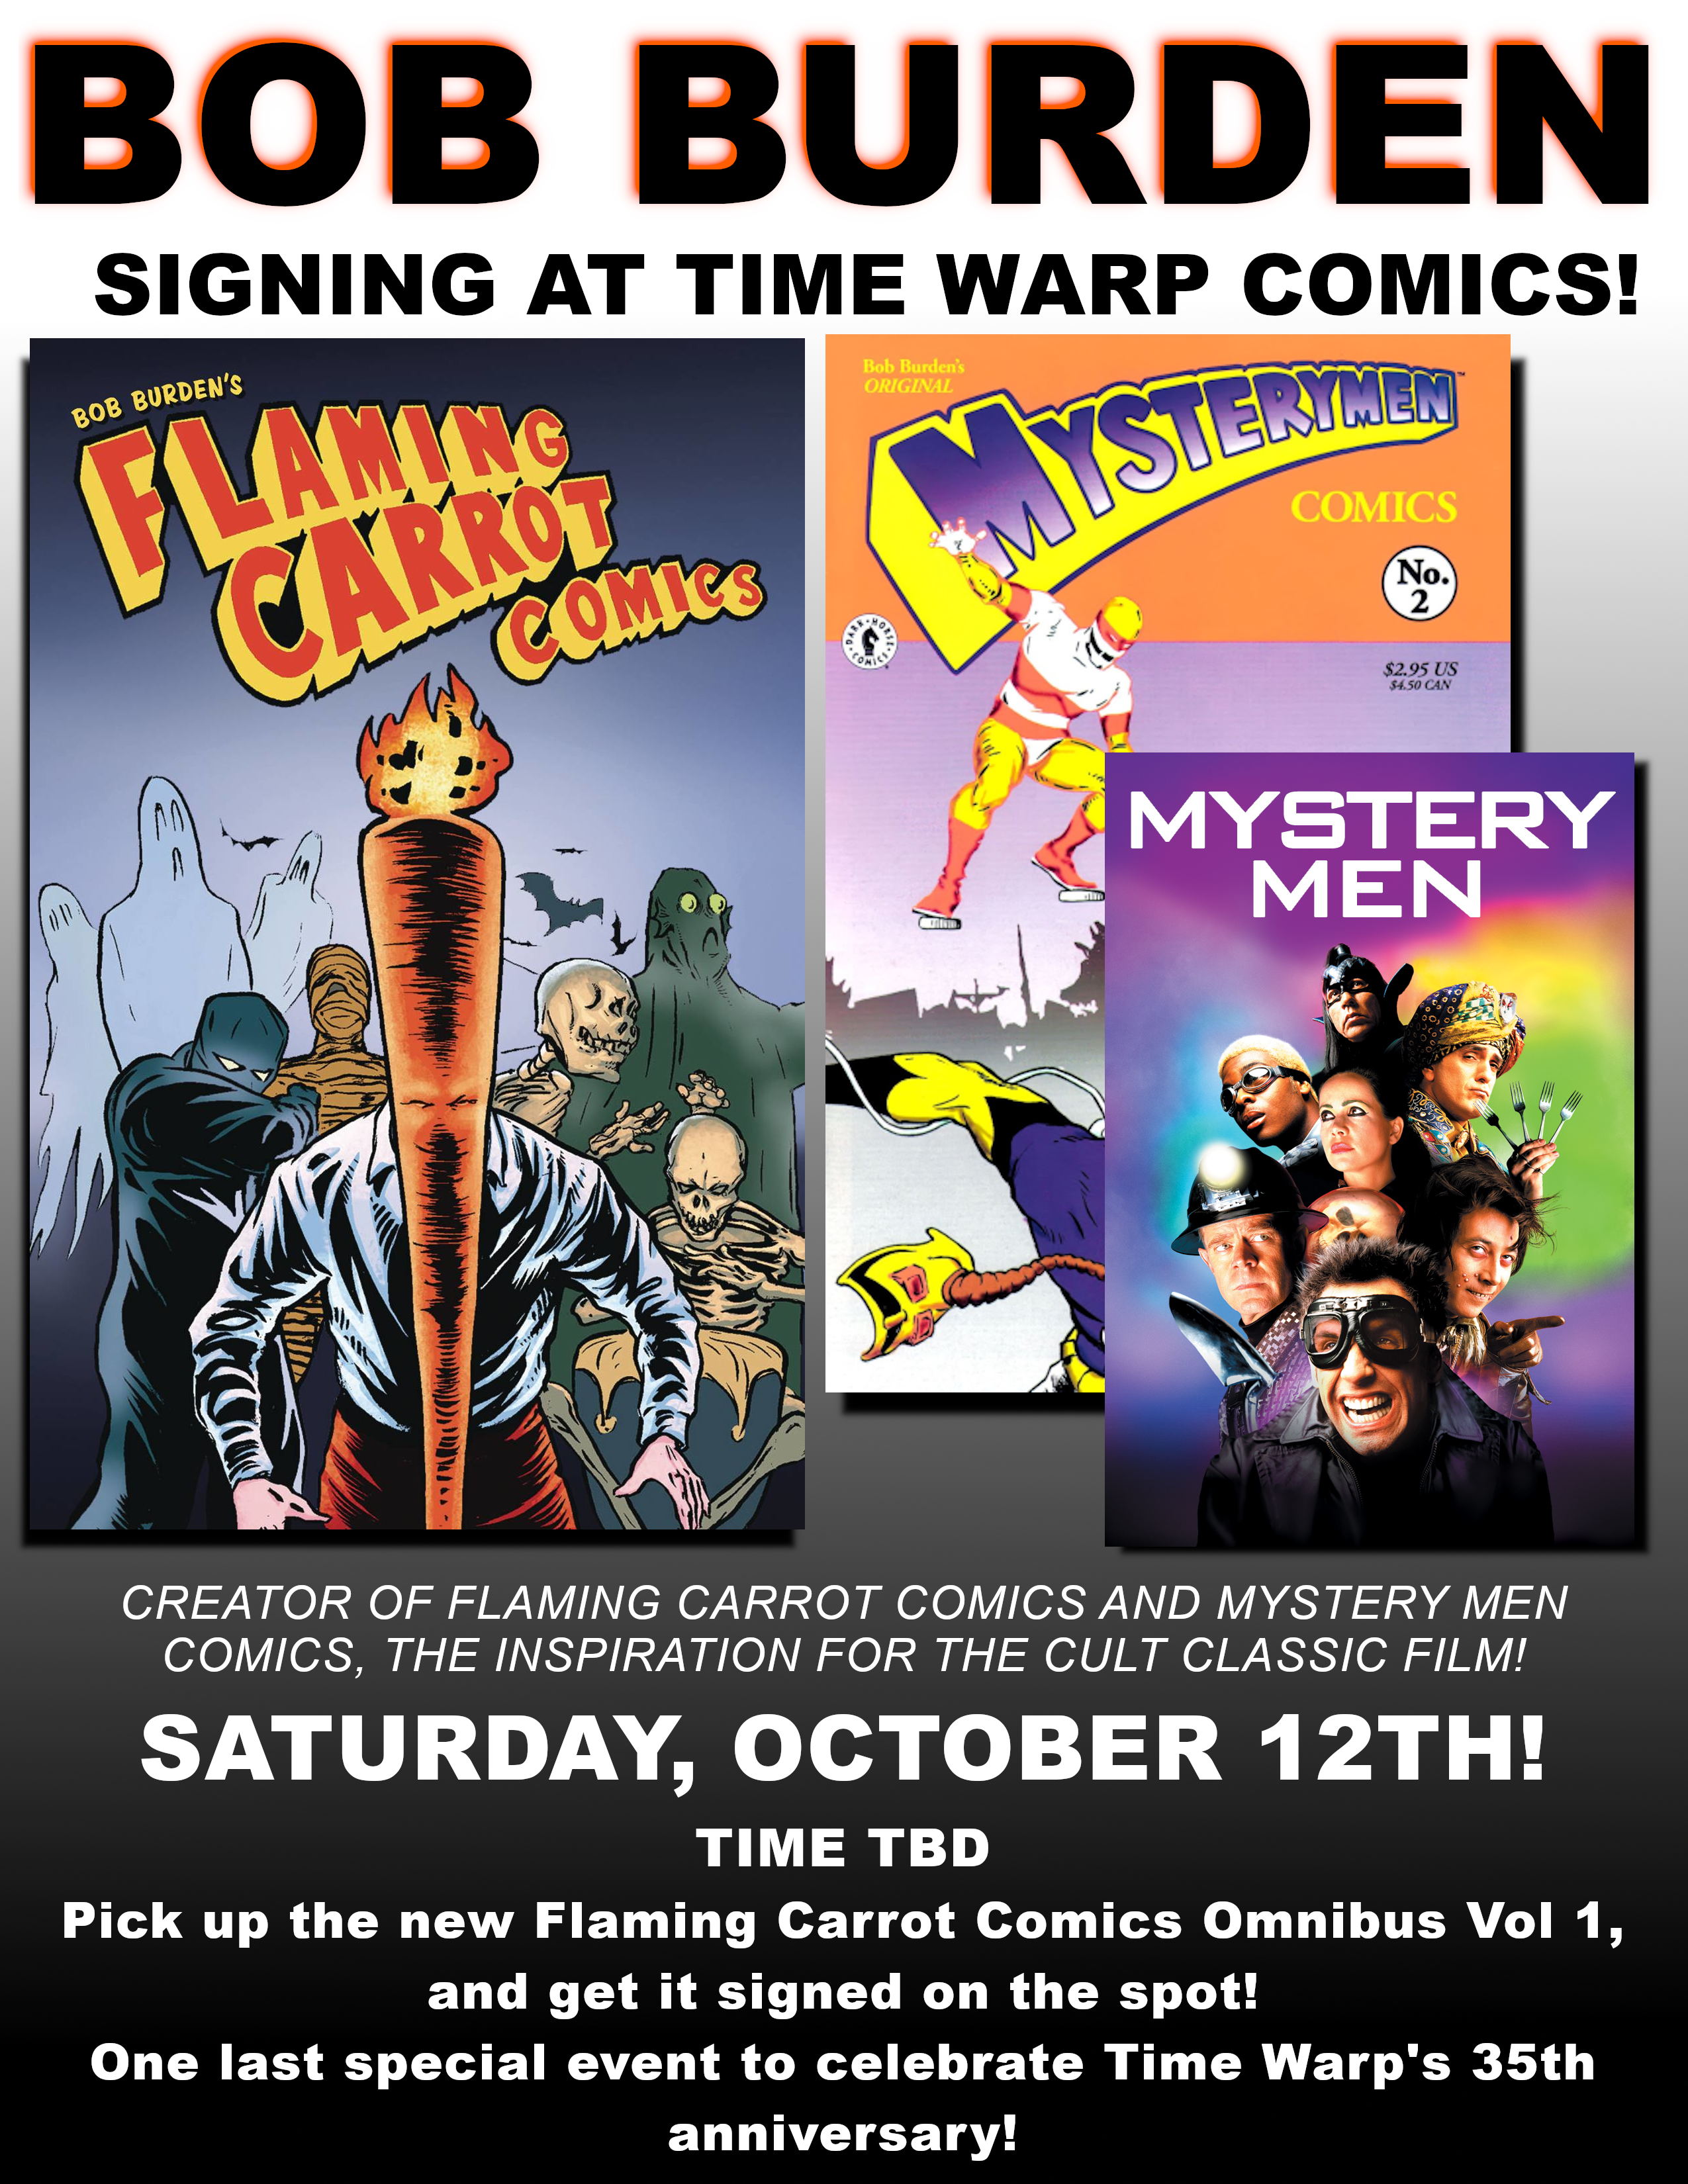 BOB BURDEN (Flaming Carrot Comics, Mystery Men) signing at Time Warp, Saturday, October 12th!